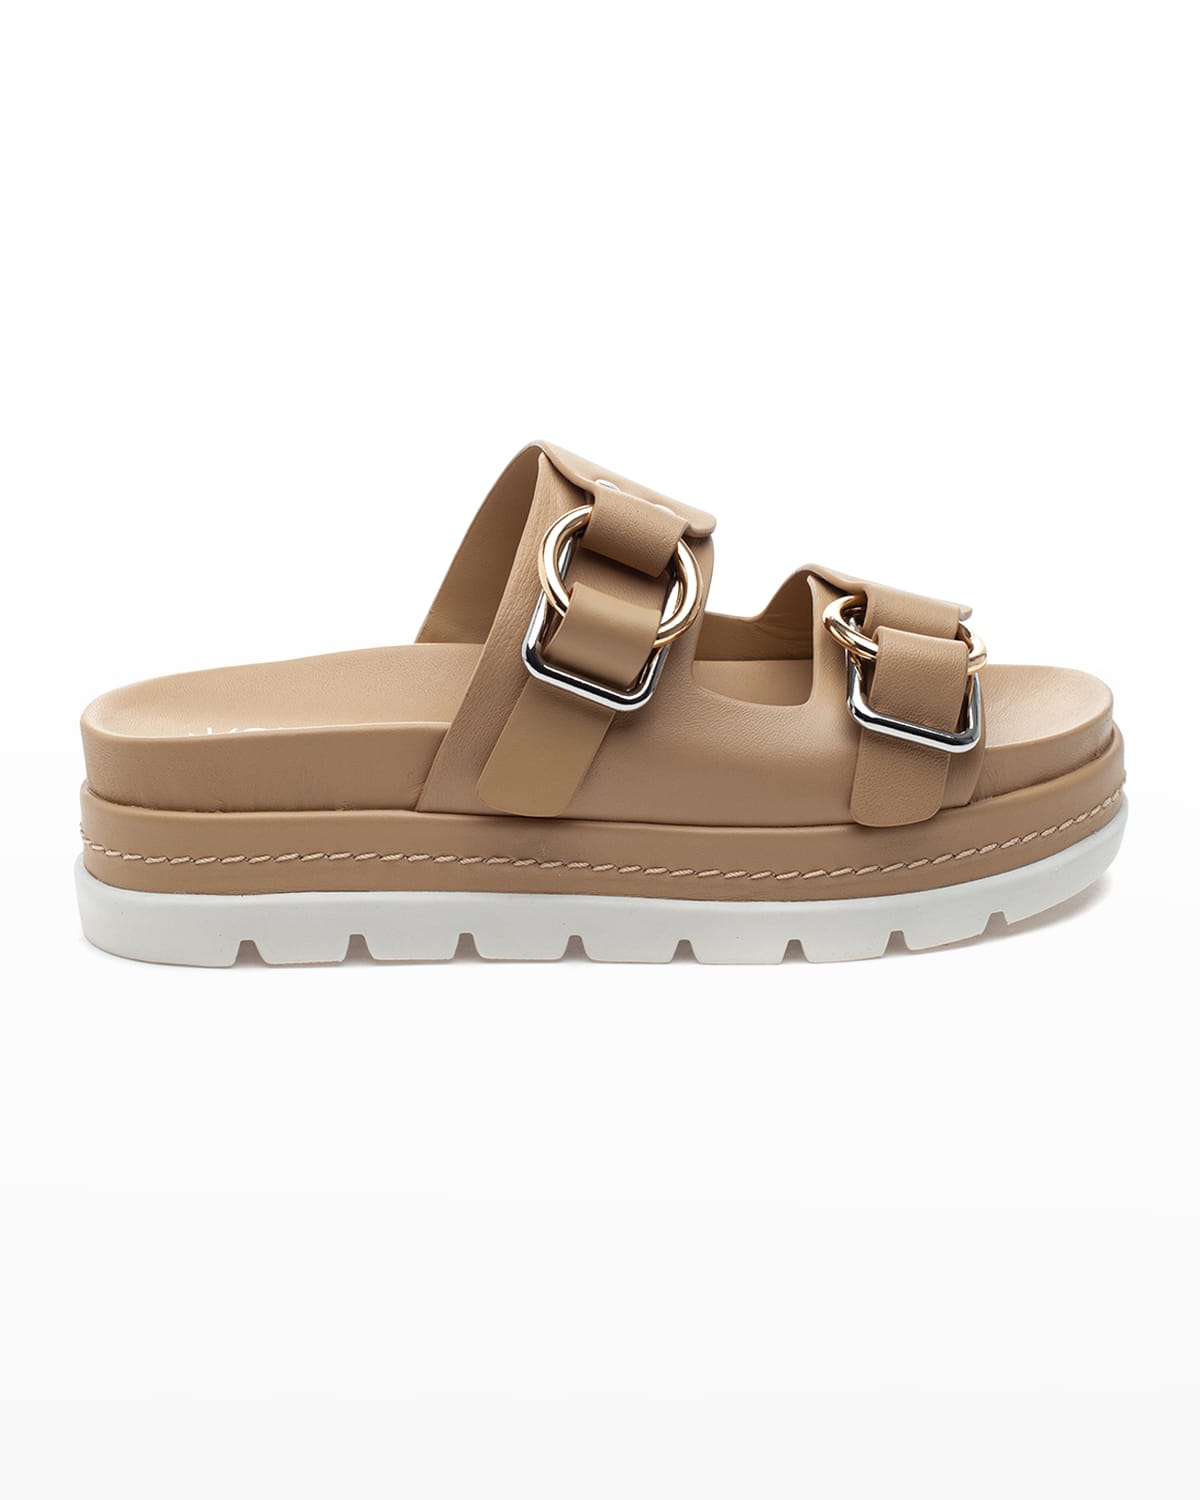 JSlides Baha Leather Double-Buckle Slide Sandals